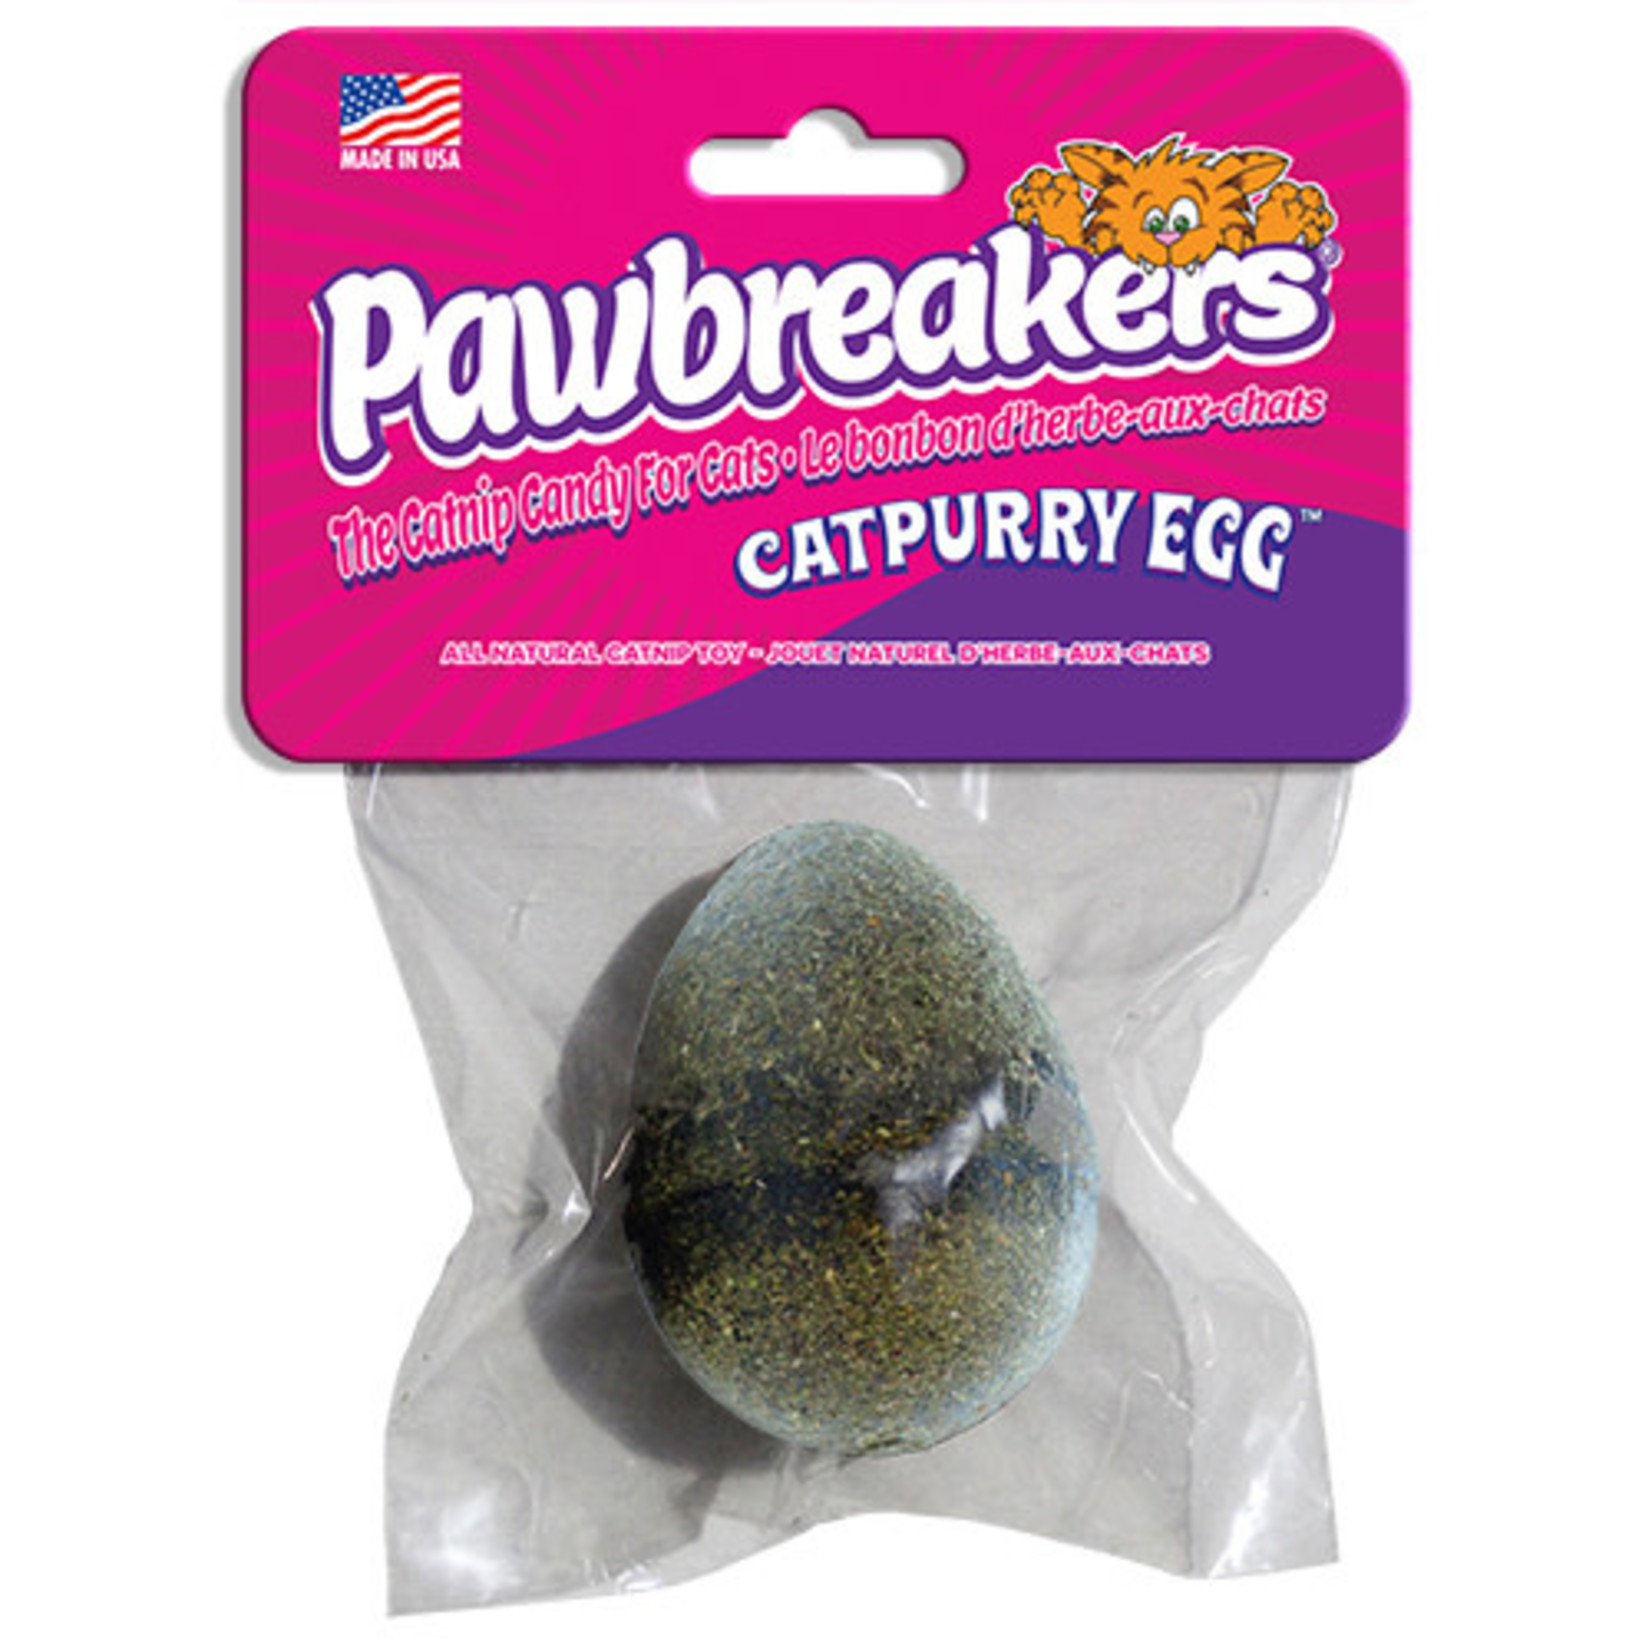 PAWBREAKERS Pawbreakers Catpurry Egg - 68 g